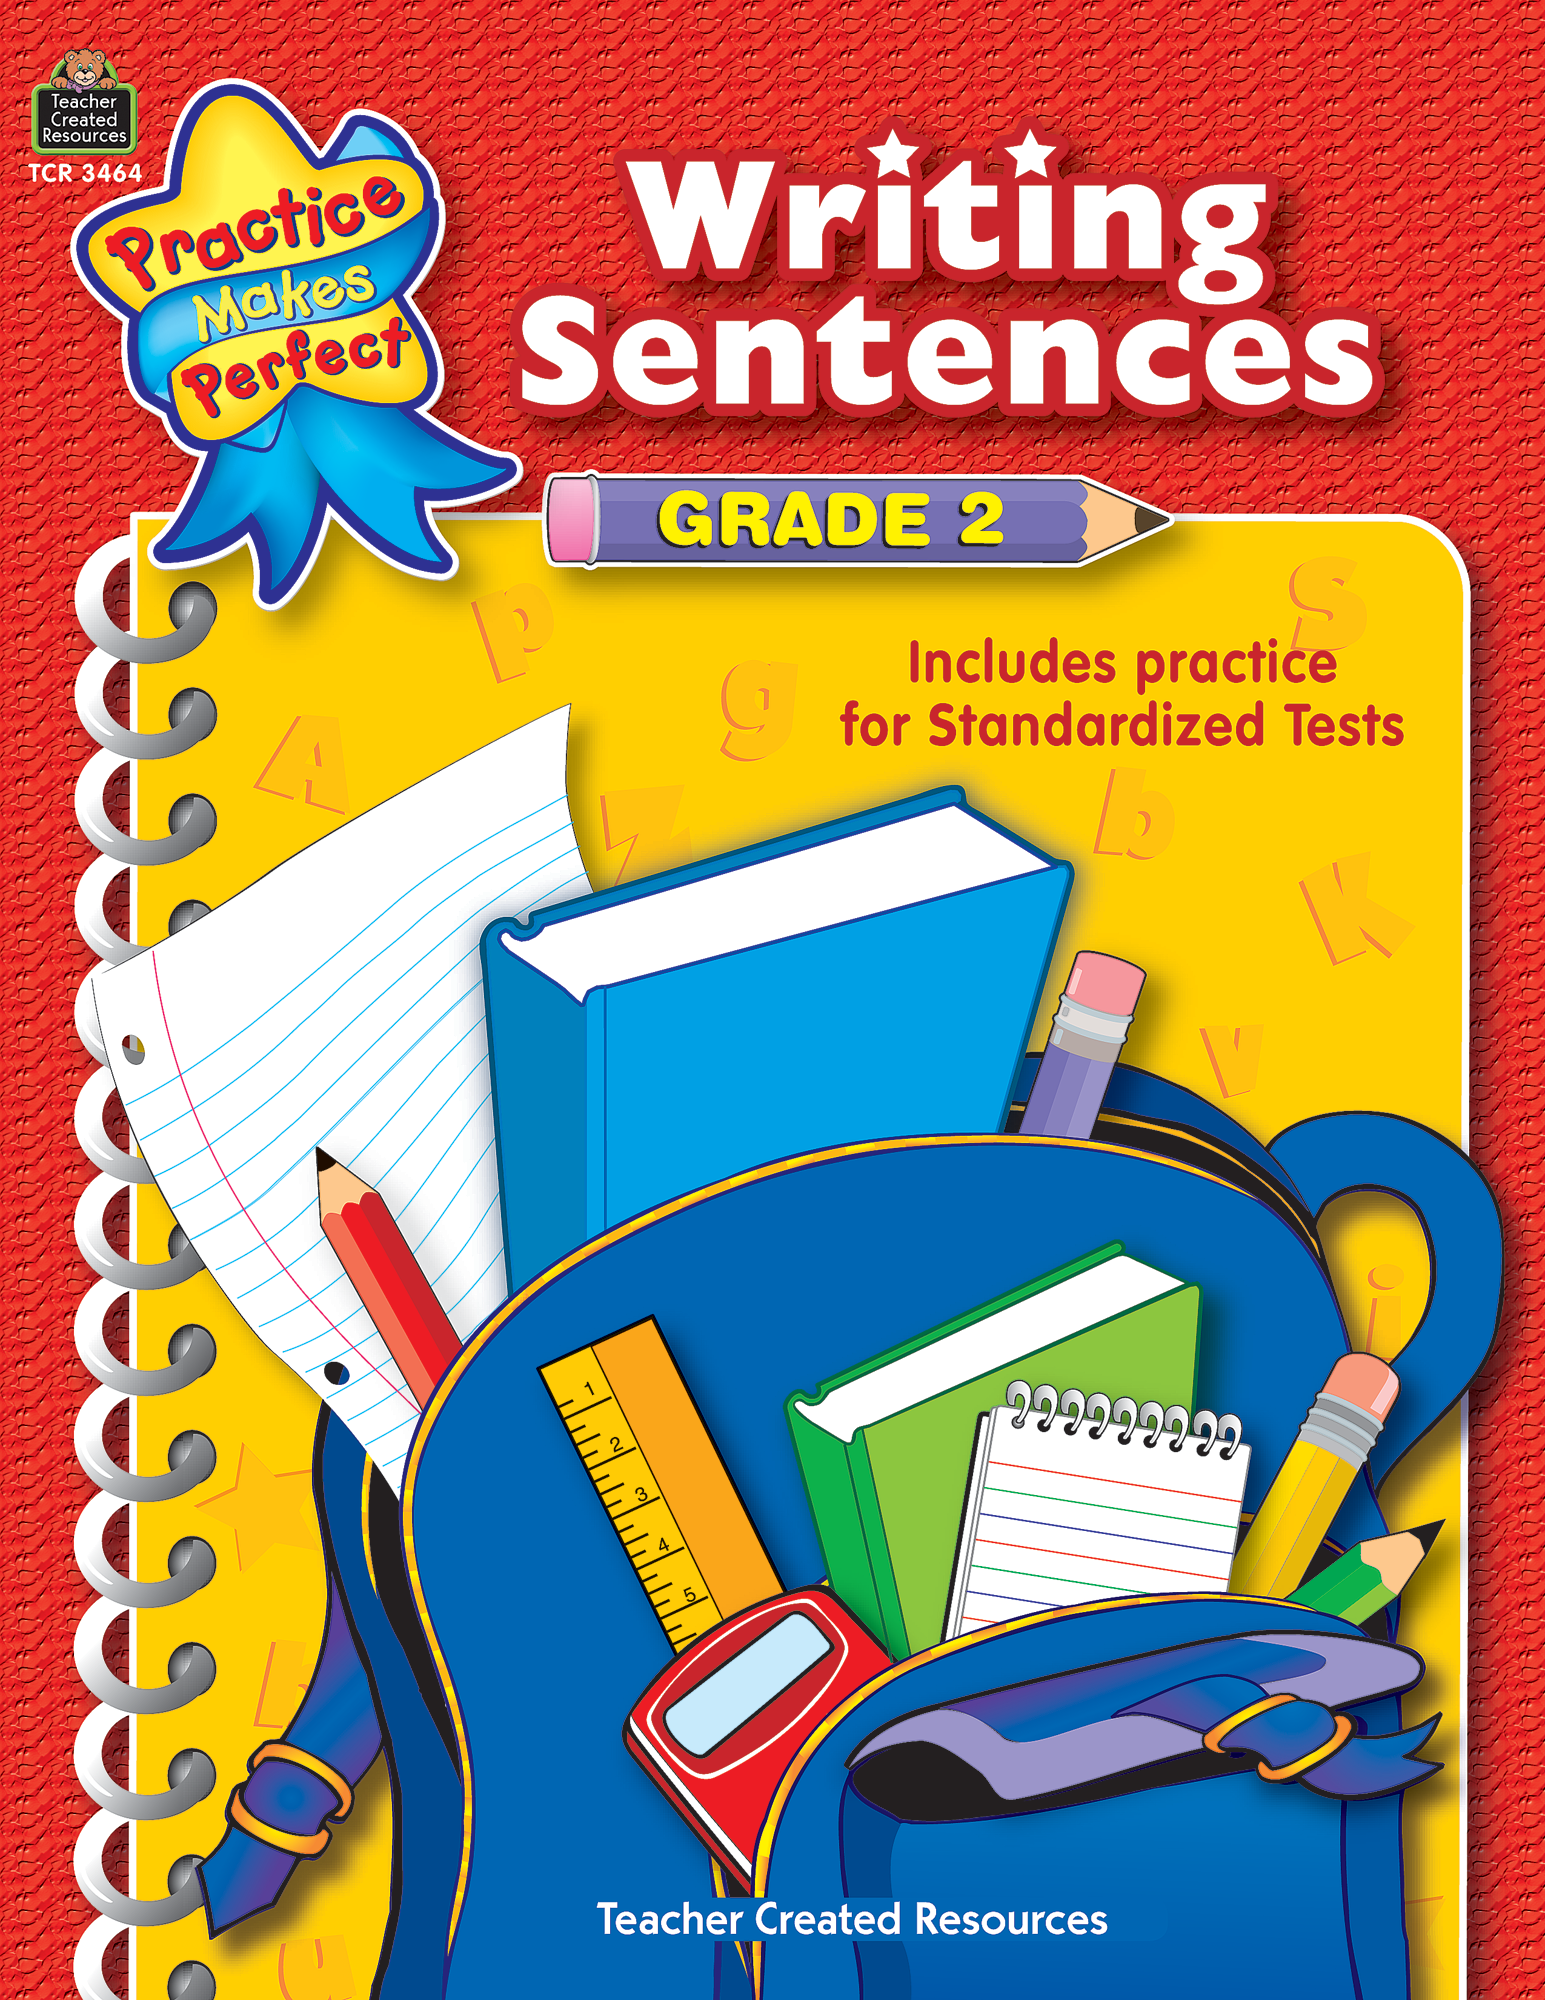 Writing Sentences Grade 2 - TCR3464 | Teacher Created Resources